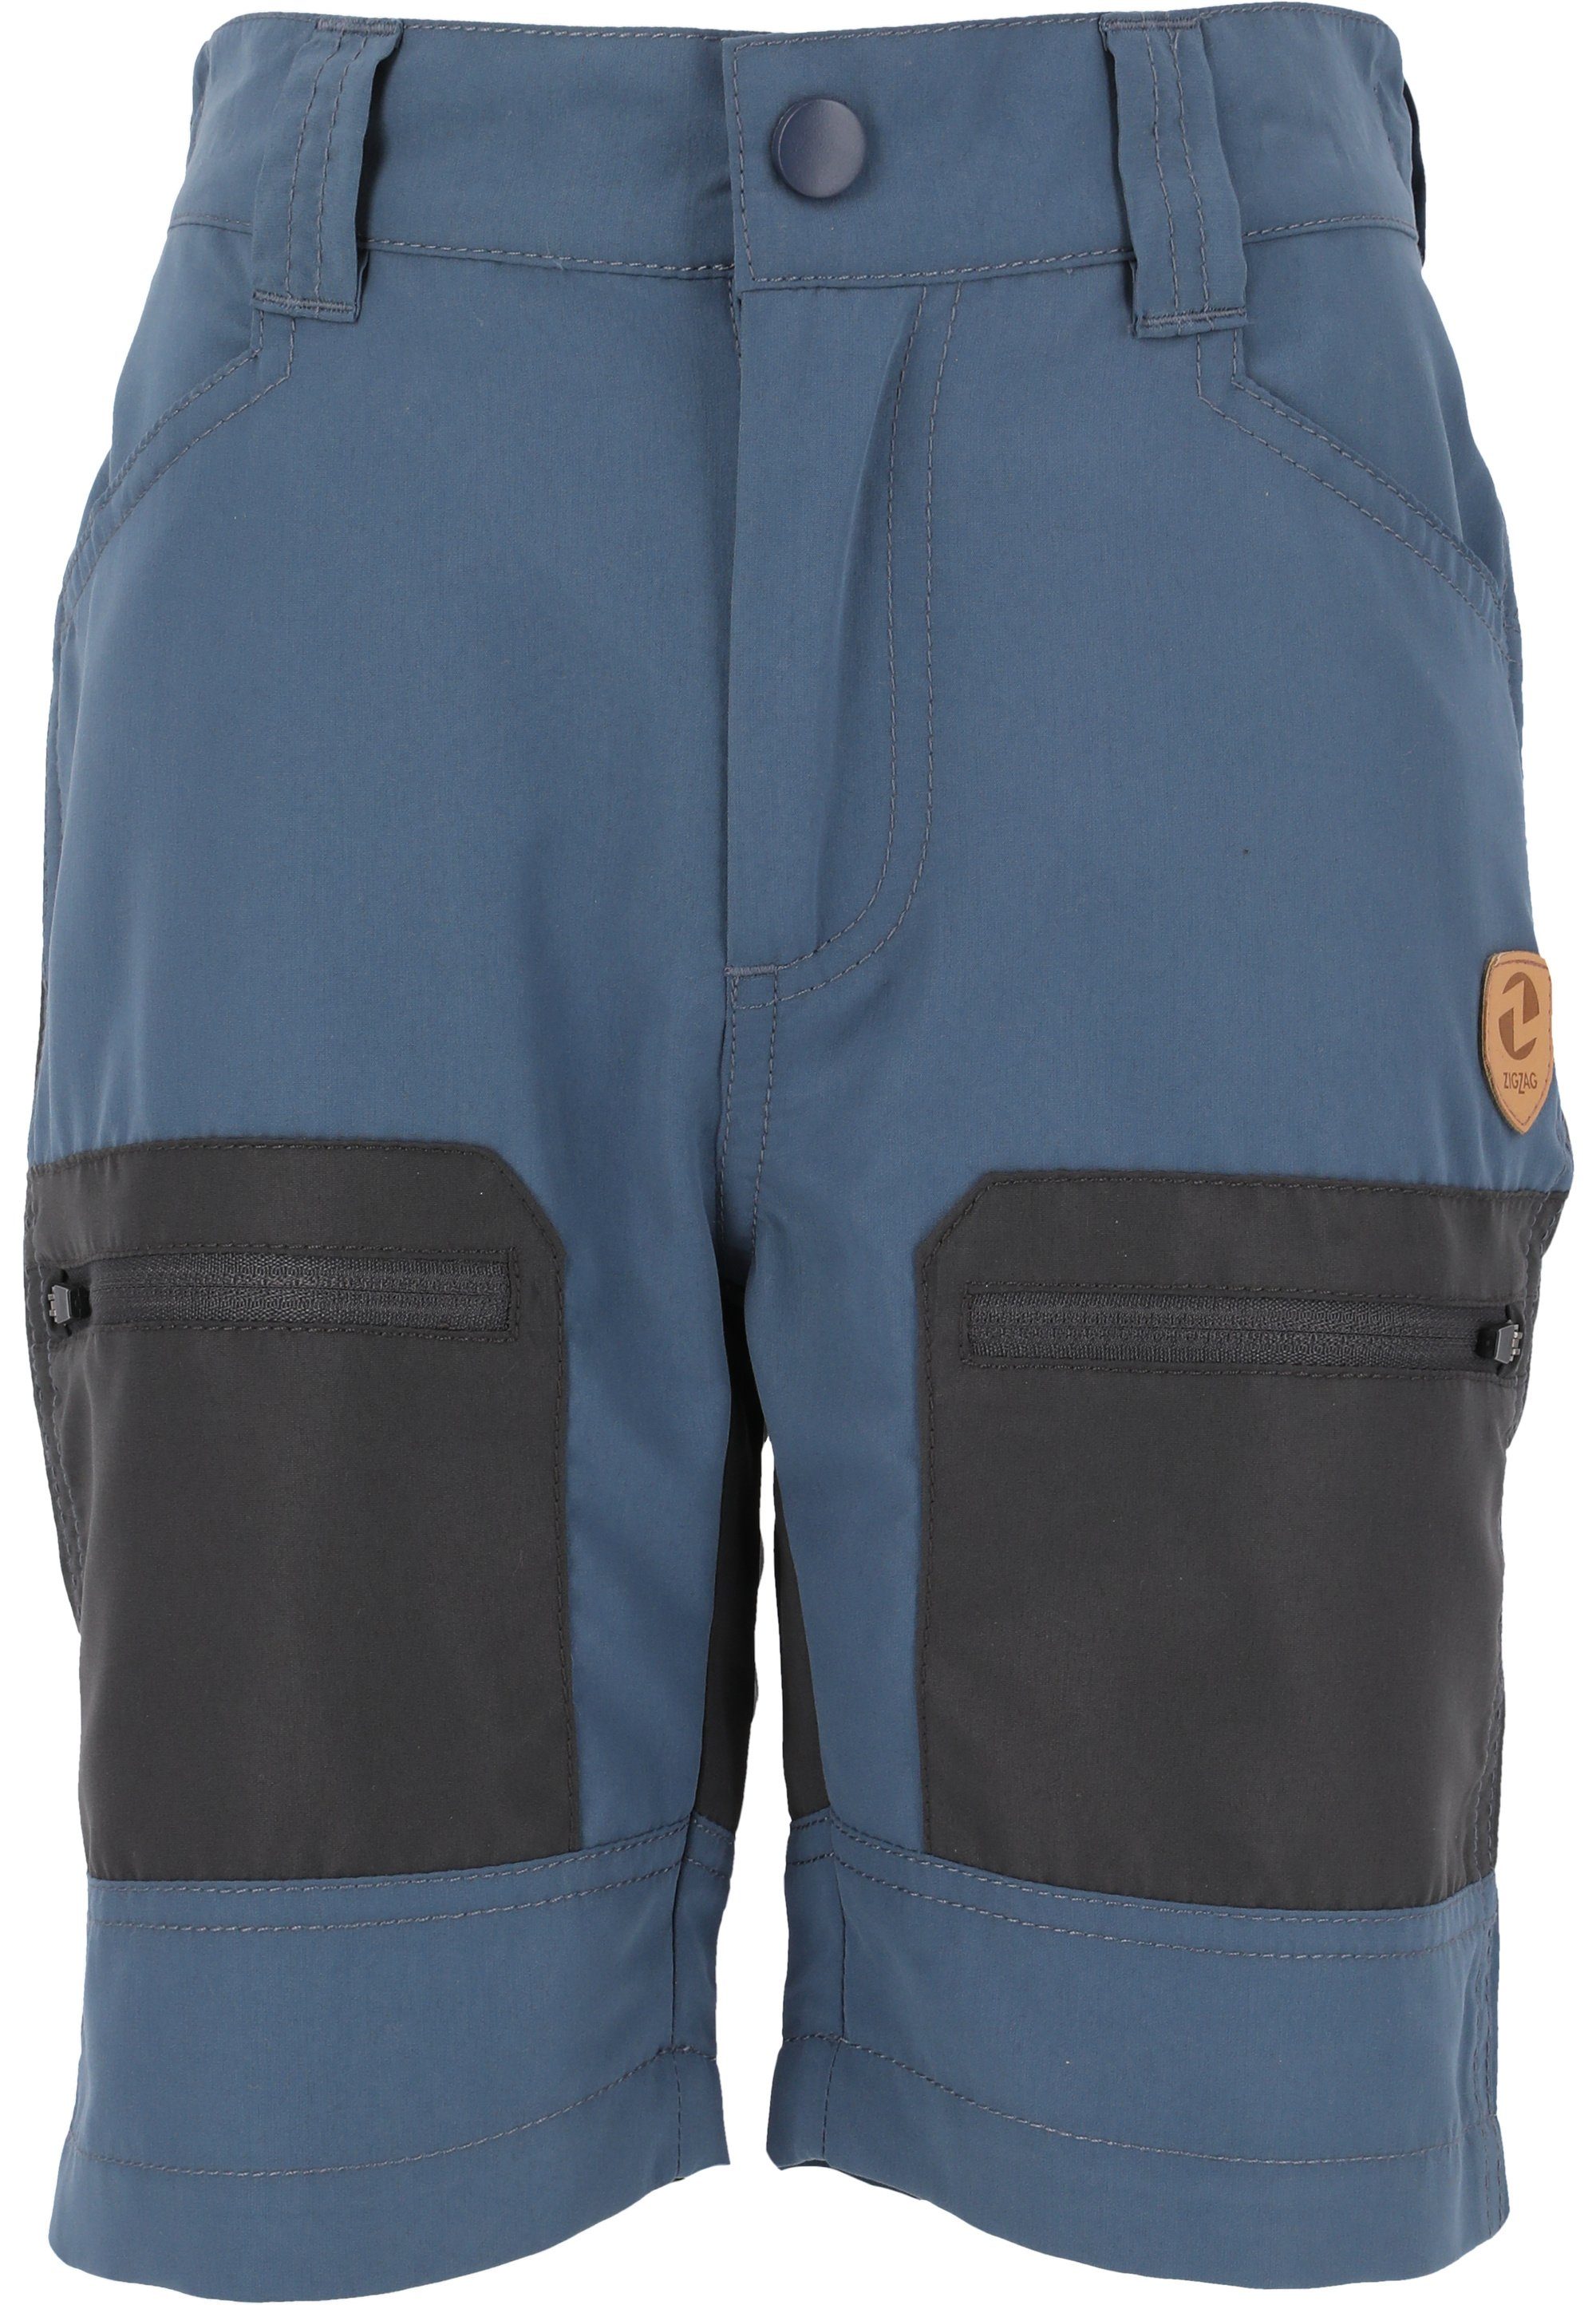 ZIGZAG Shorts Atlantic aus robustem Material blau-schwarz